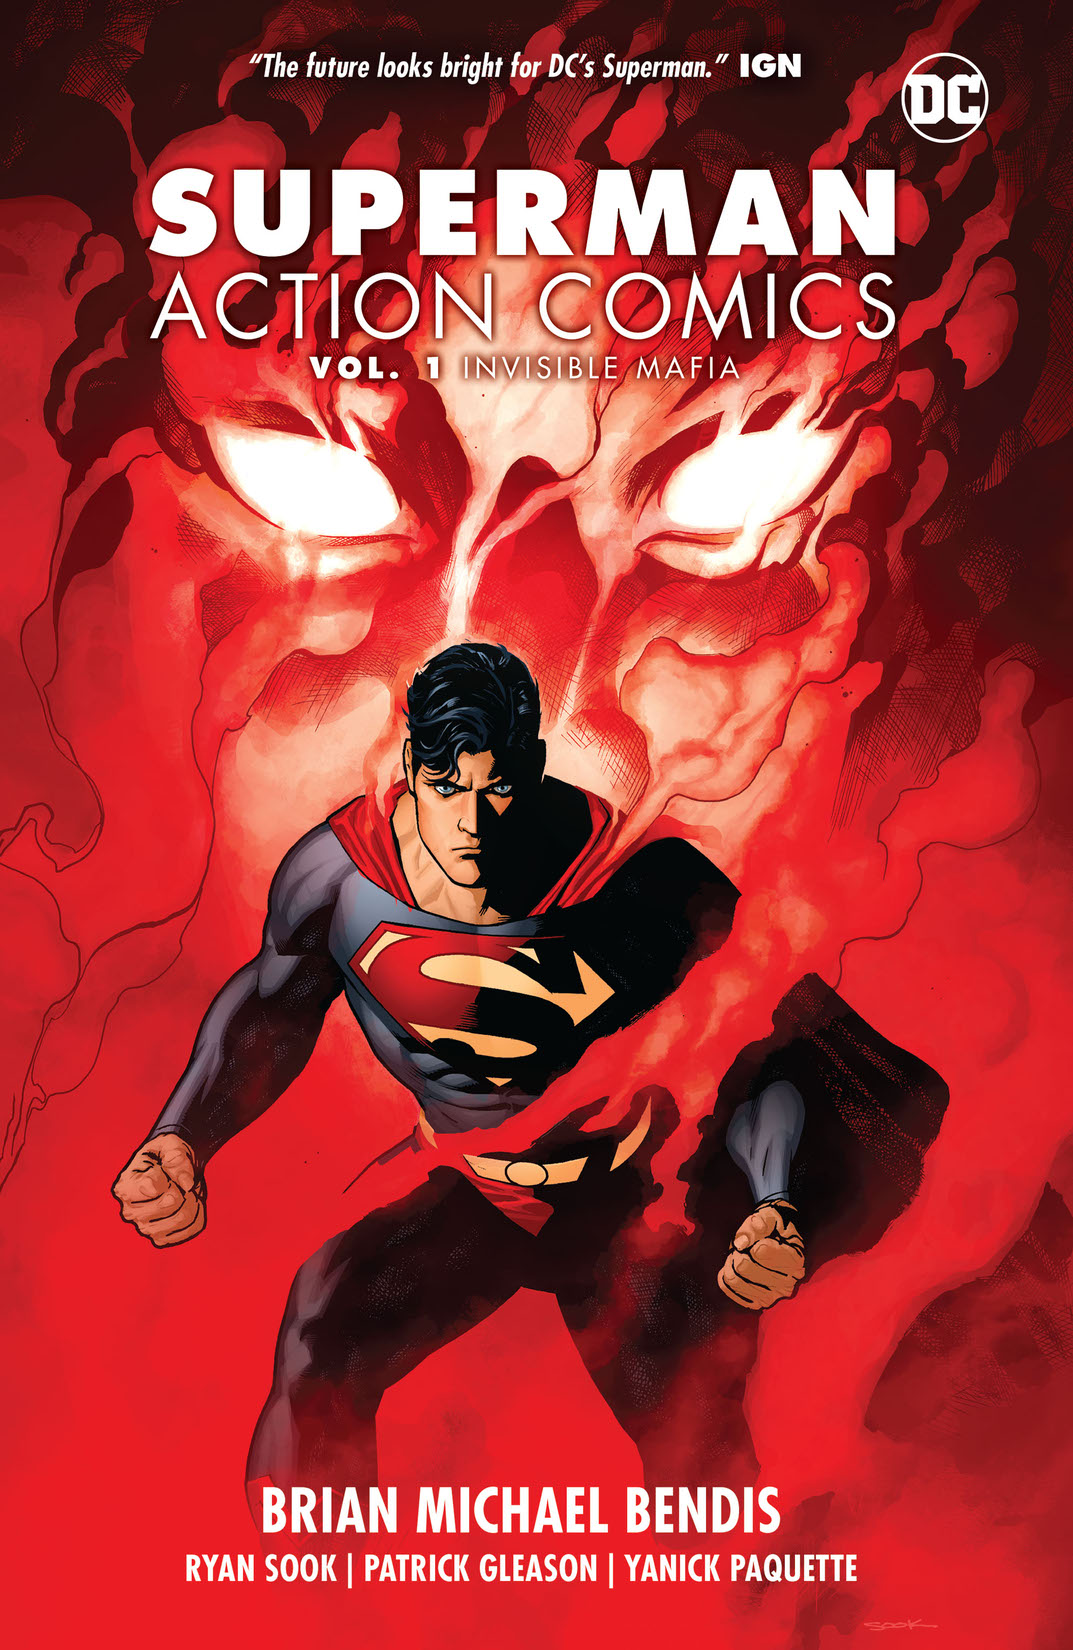 Superman - Action Comics Vol. 1: Invisible Mafia (Bendis) preview images